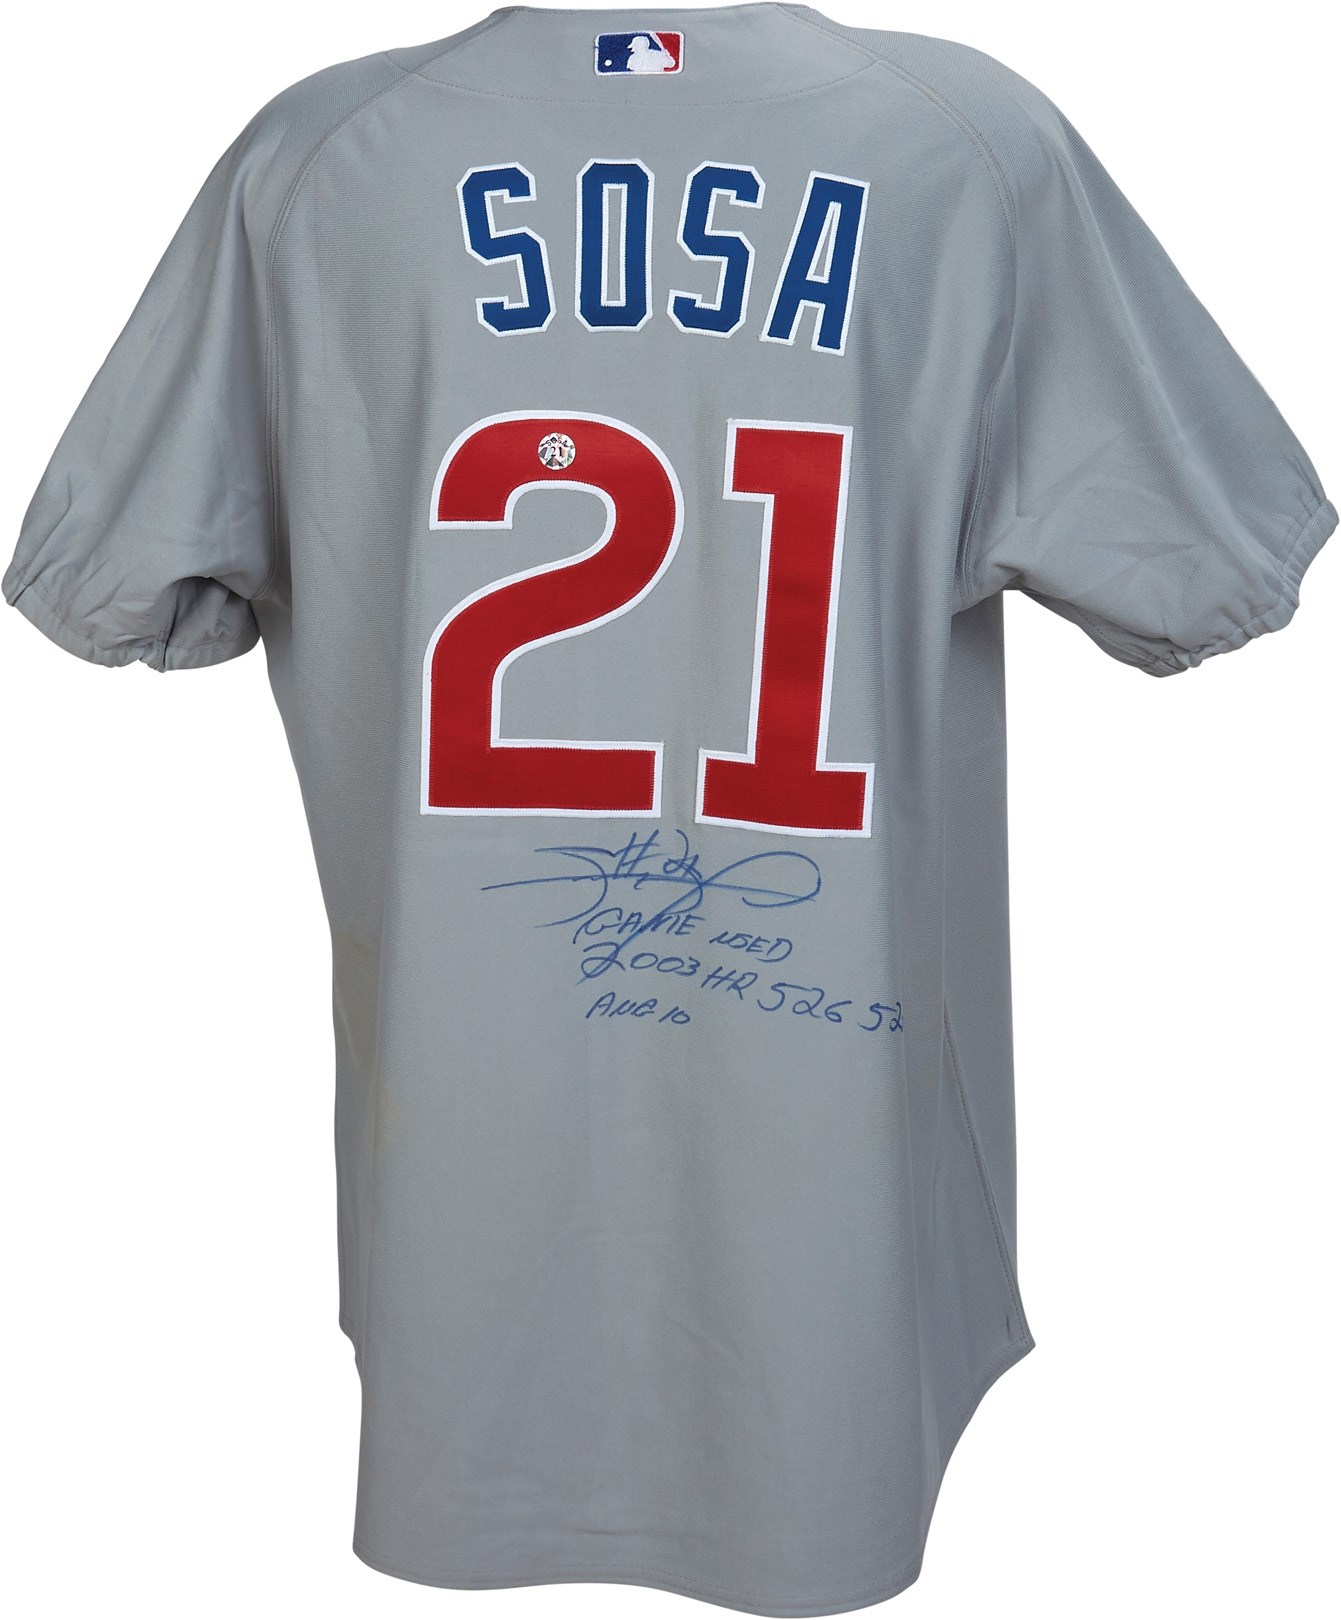 Chicago Cubs & Wrigley Field - 8/10/2003 Sammy Sosa Game Worn Jersey Career Home Runs 526 & 527 (PSA)